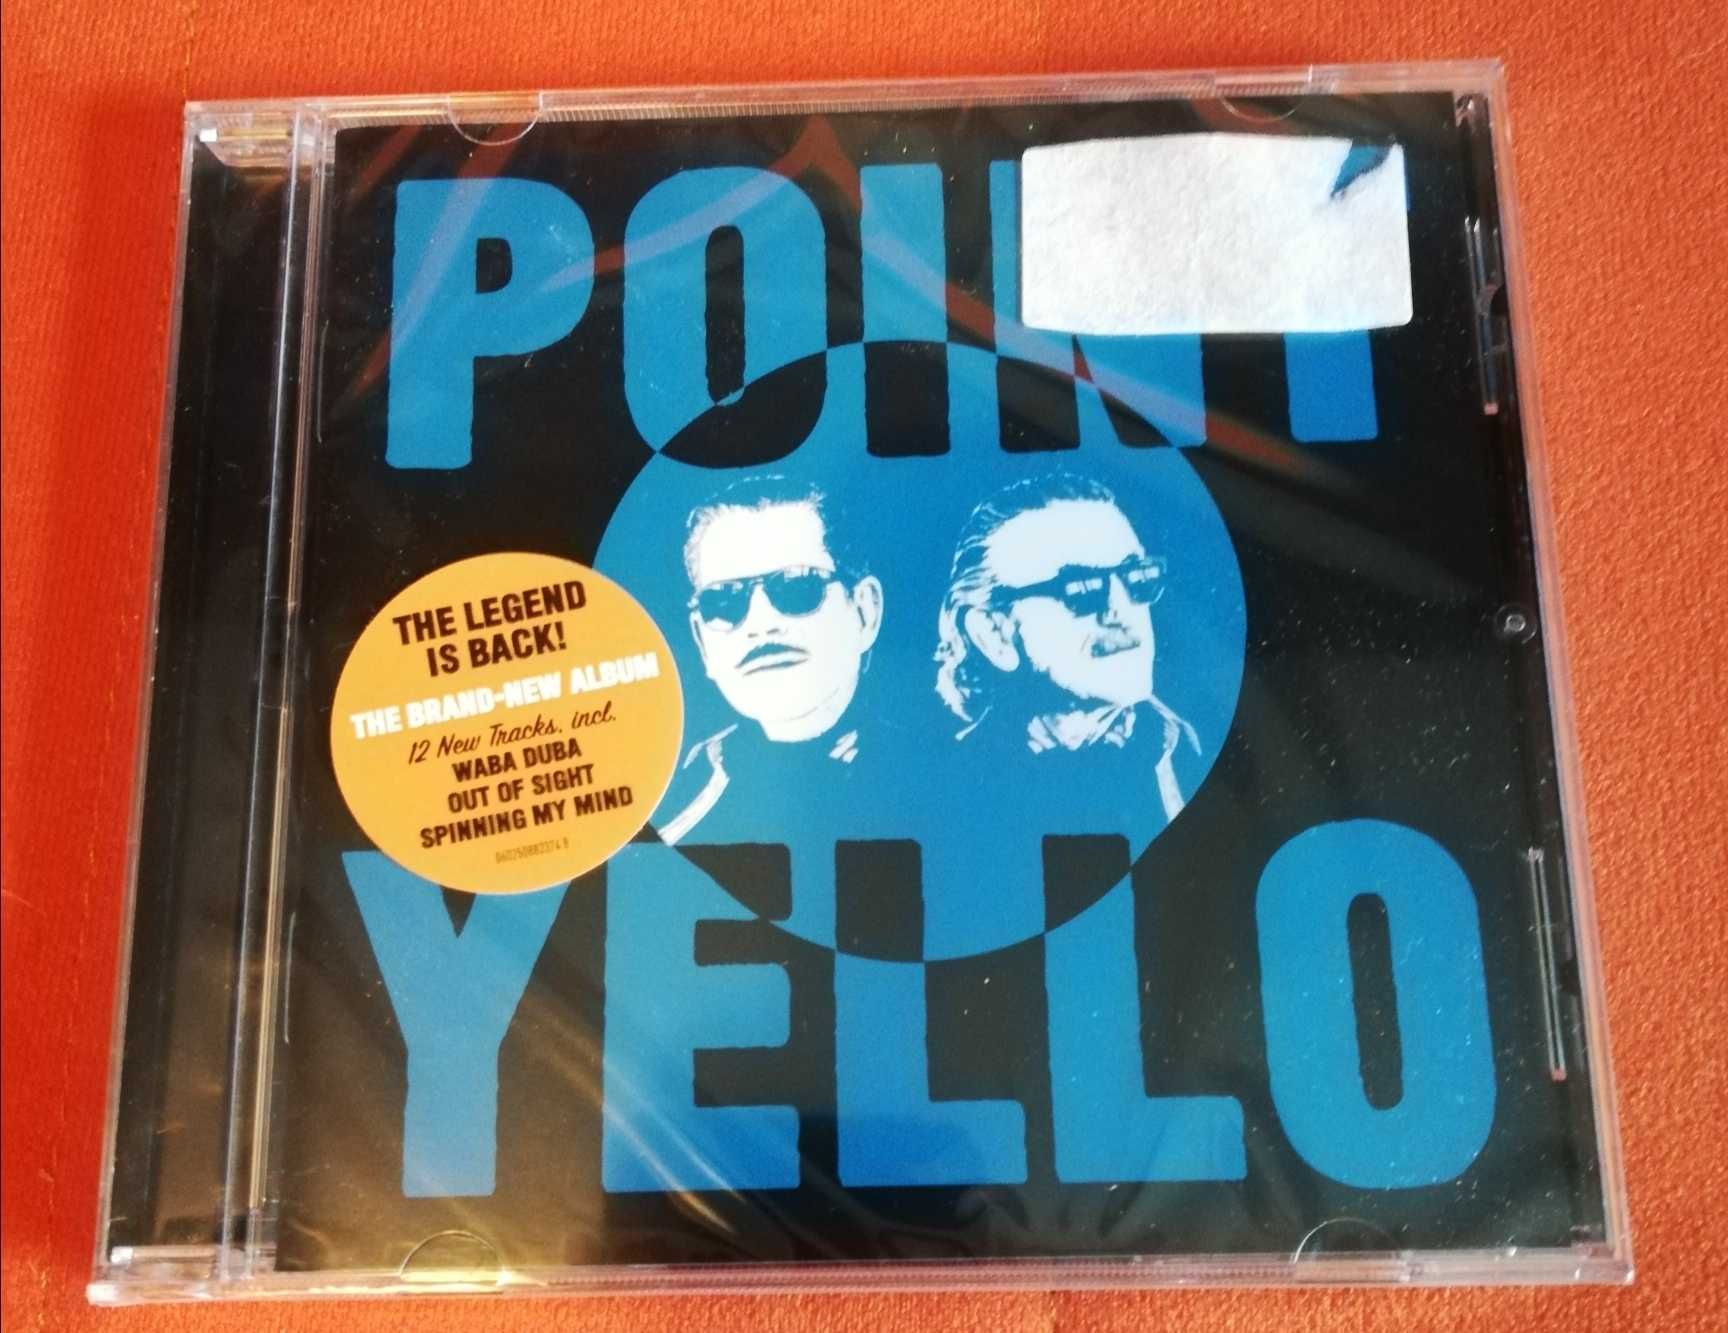 Yello – Point CD